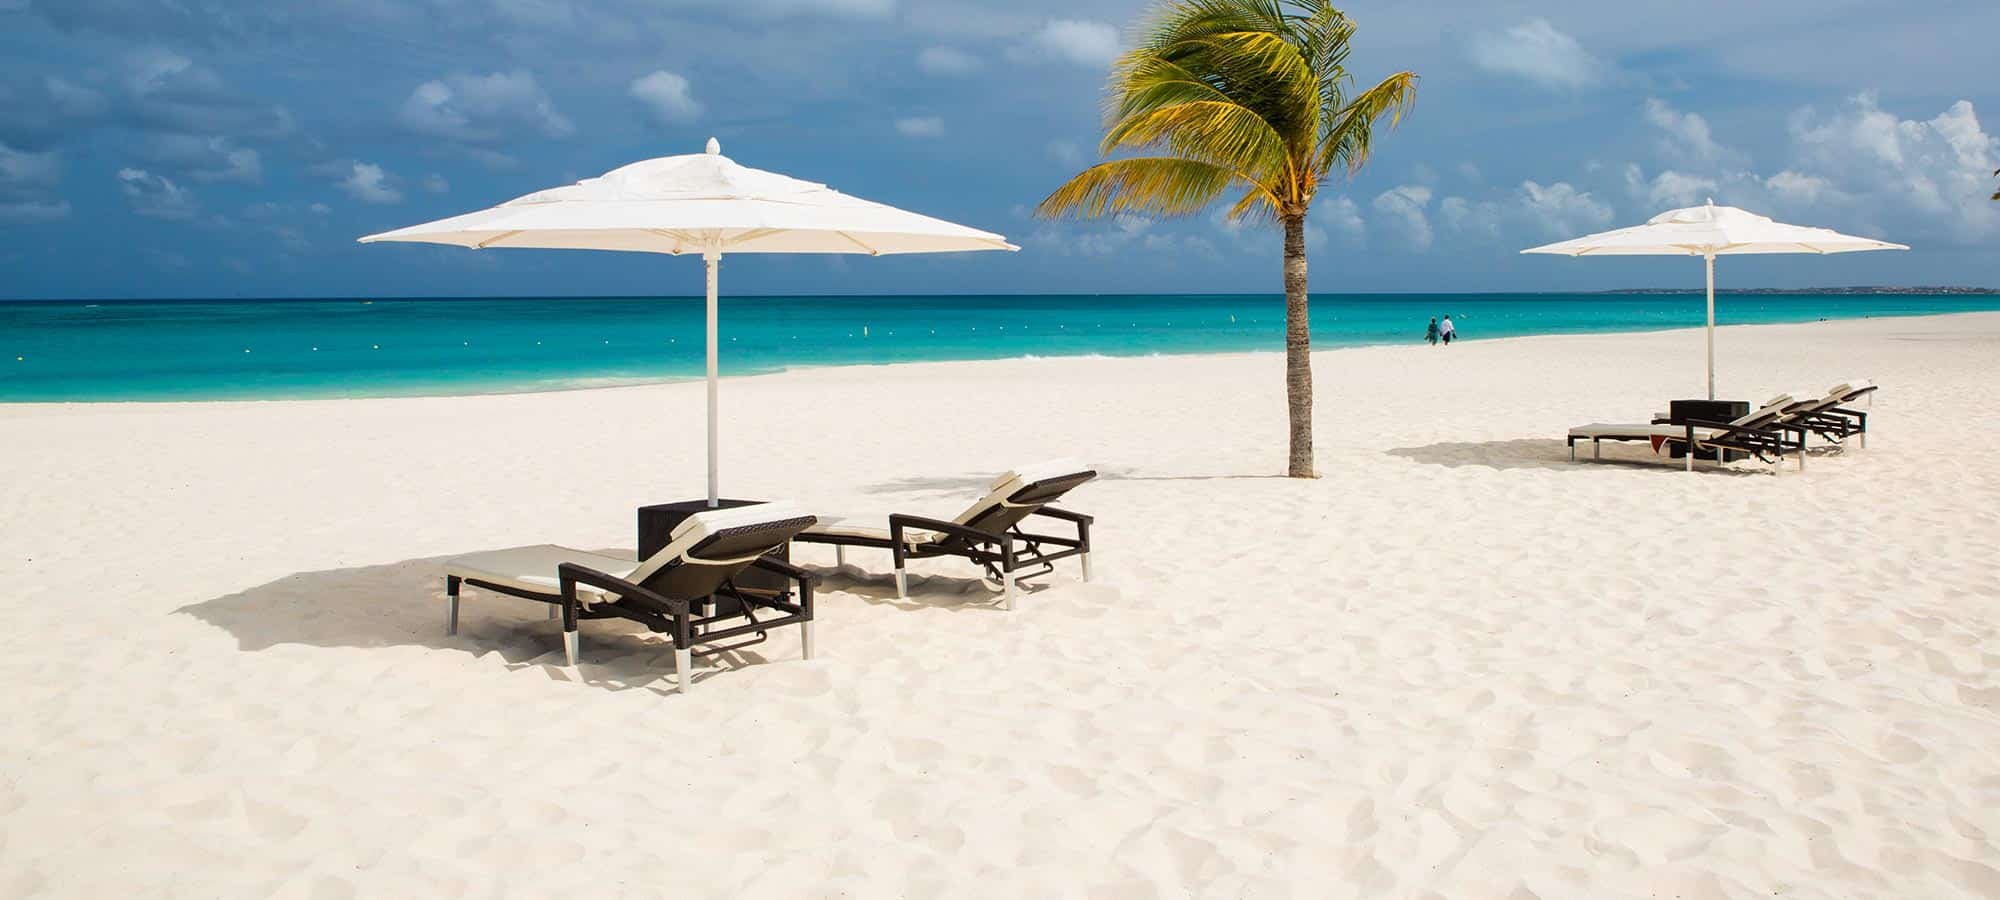 20 Best Caribbean Beach Resorts